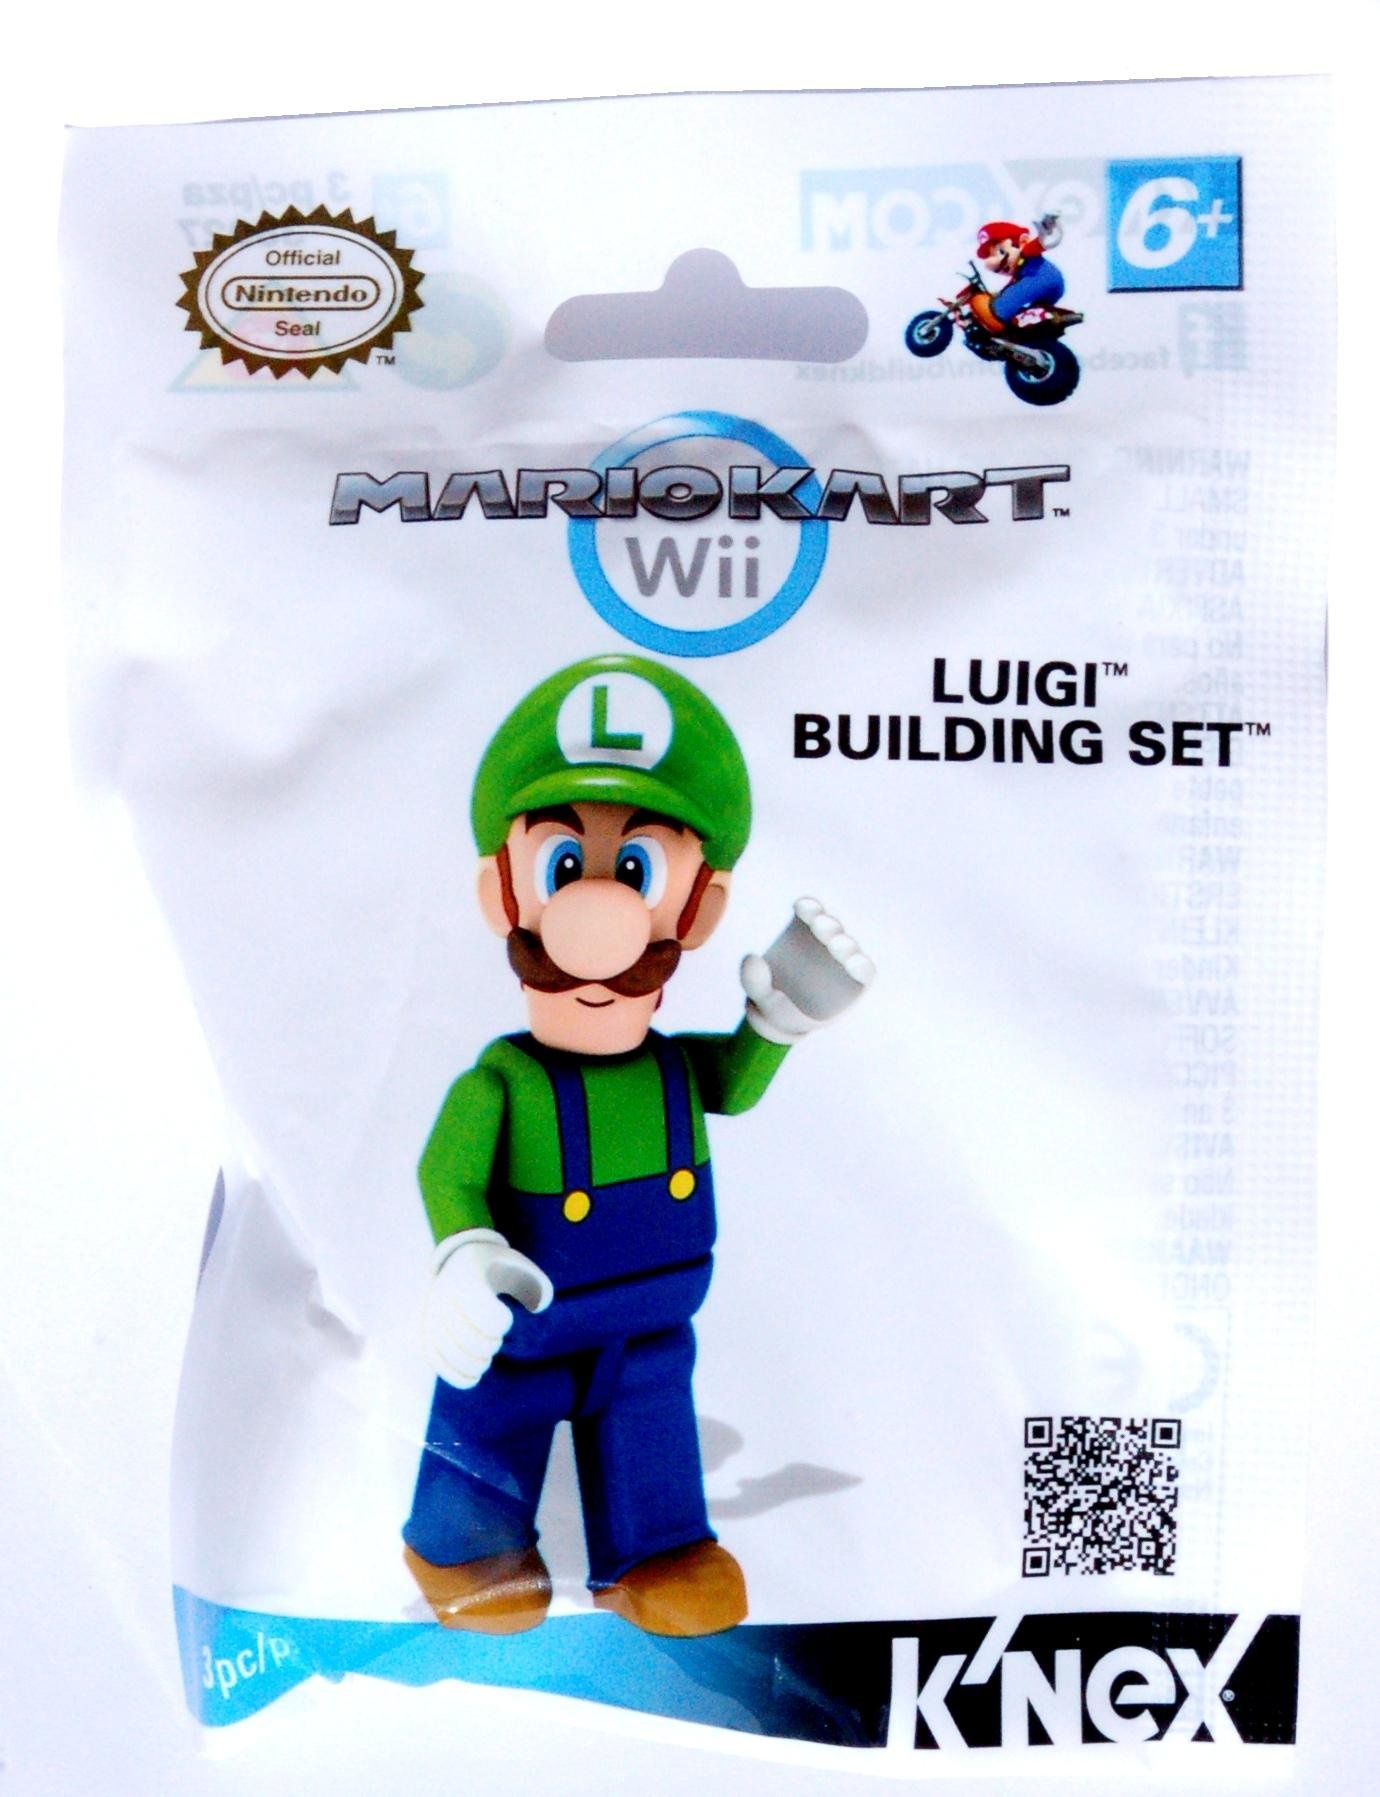 Mario Kart Wii KNEX Building Set #38027 Luigi by Nintendo (English Manual)